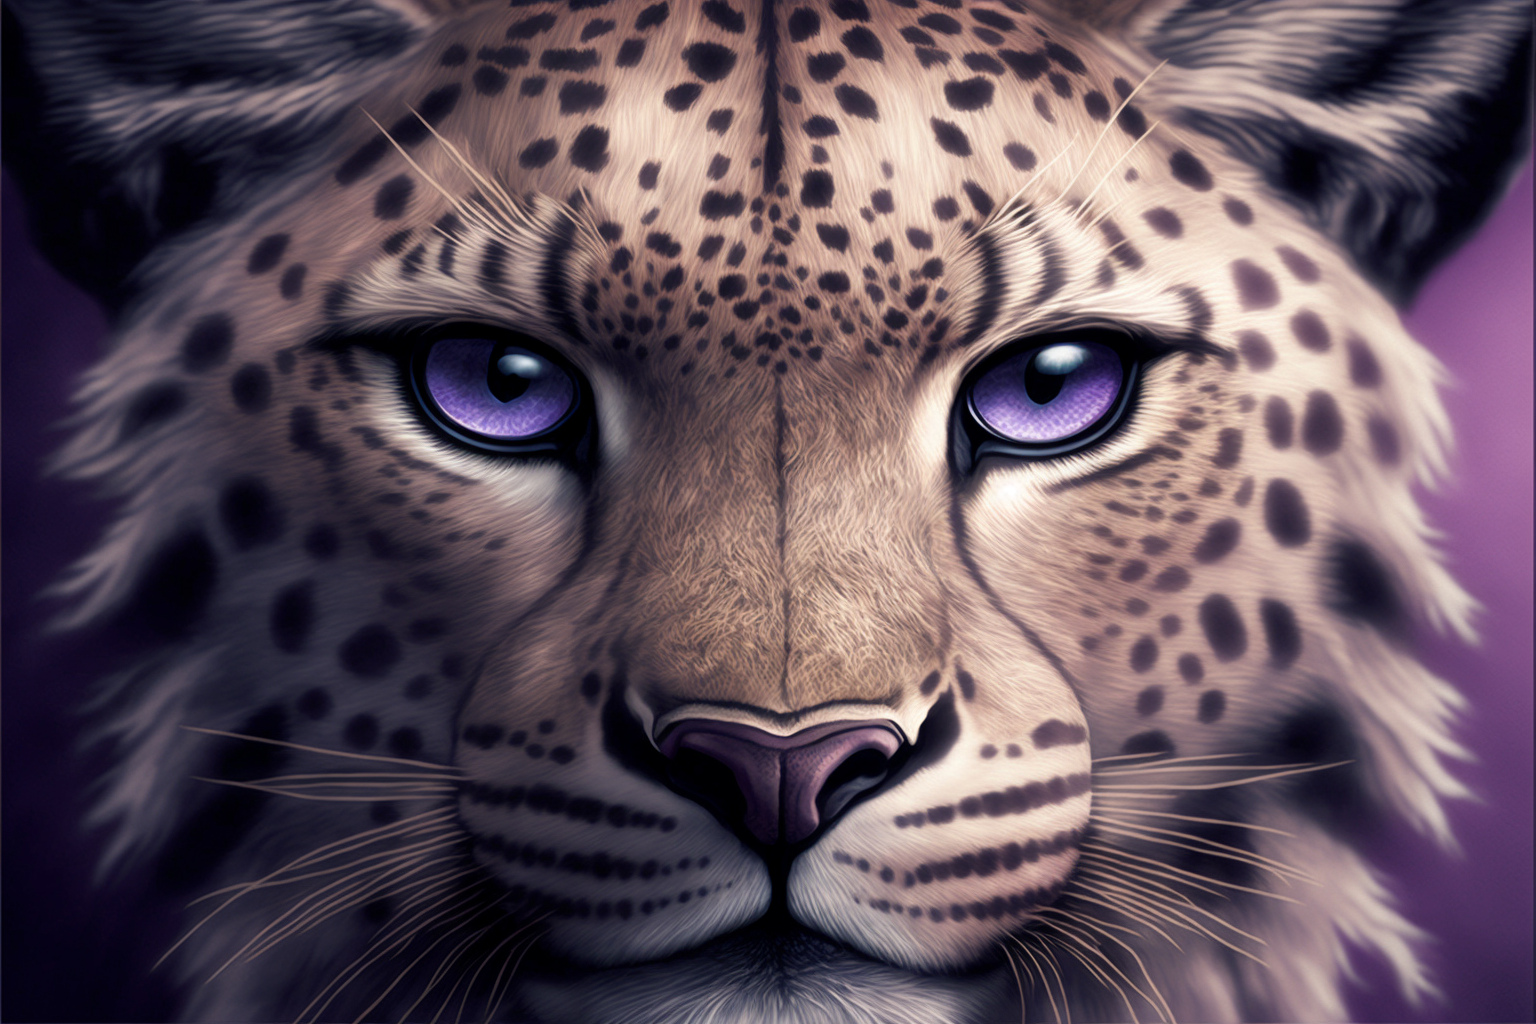 Leopard with purple eyes